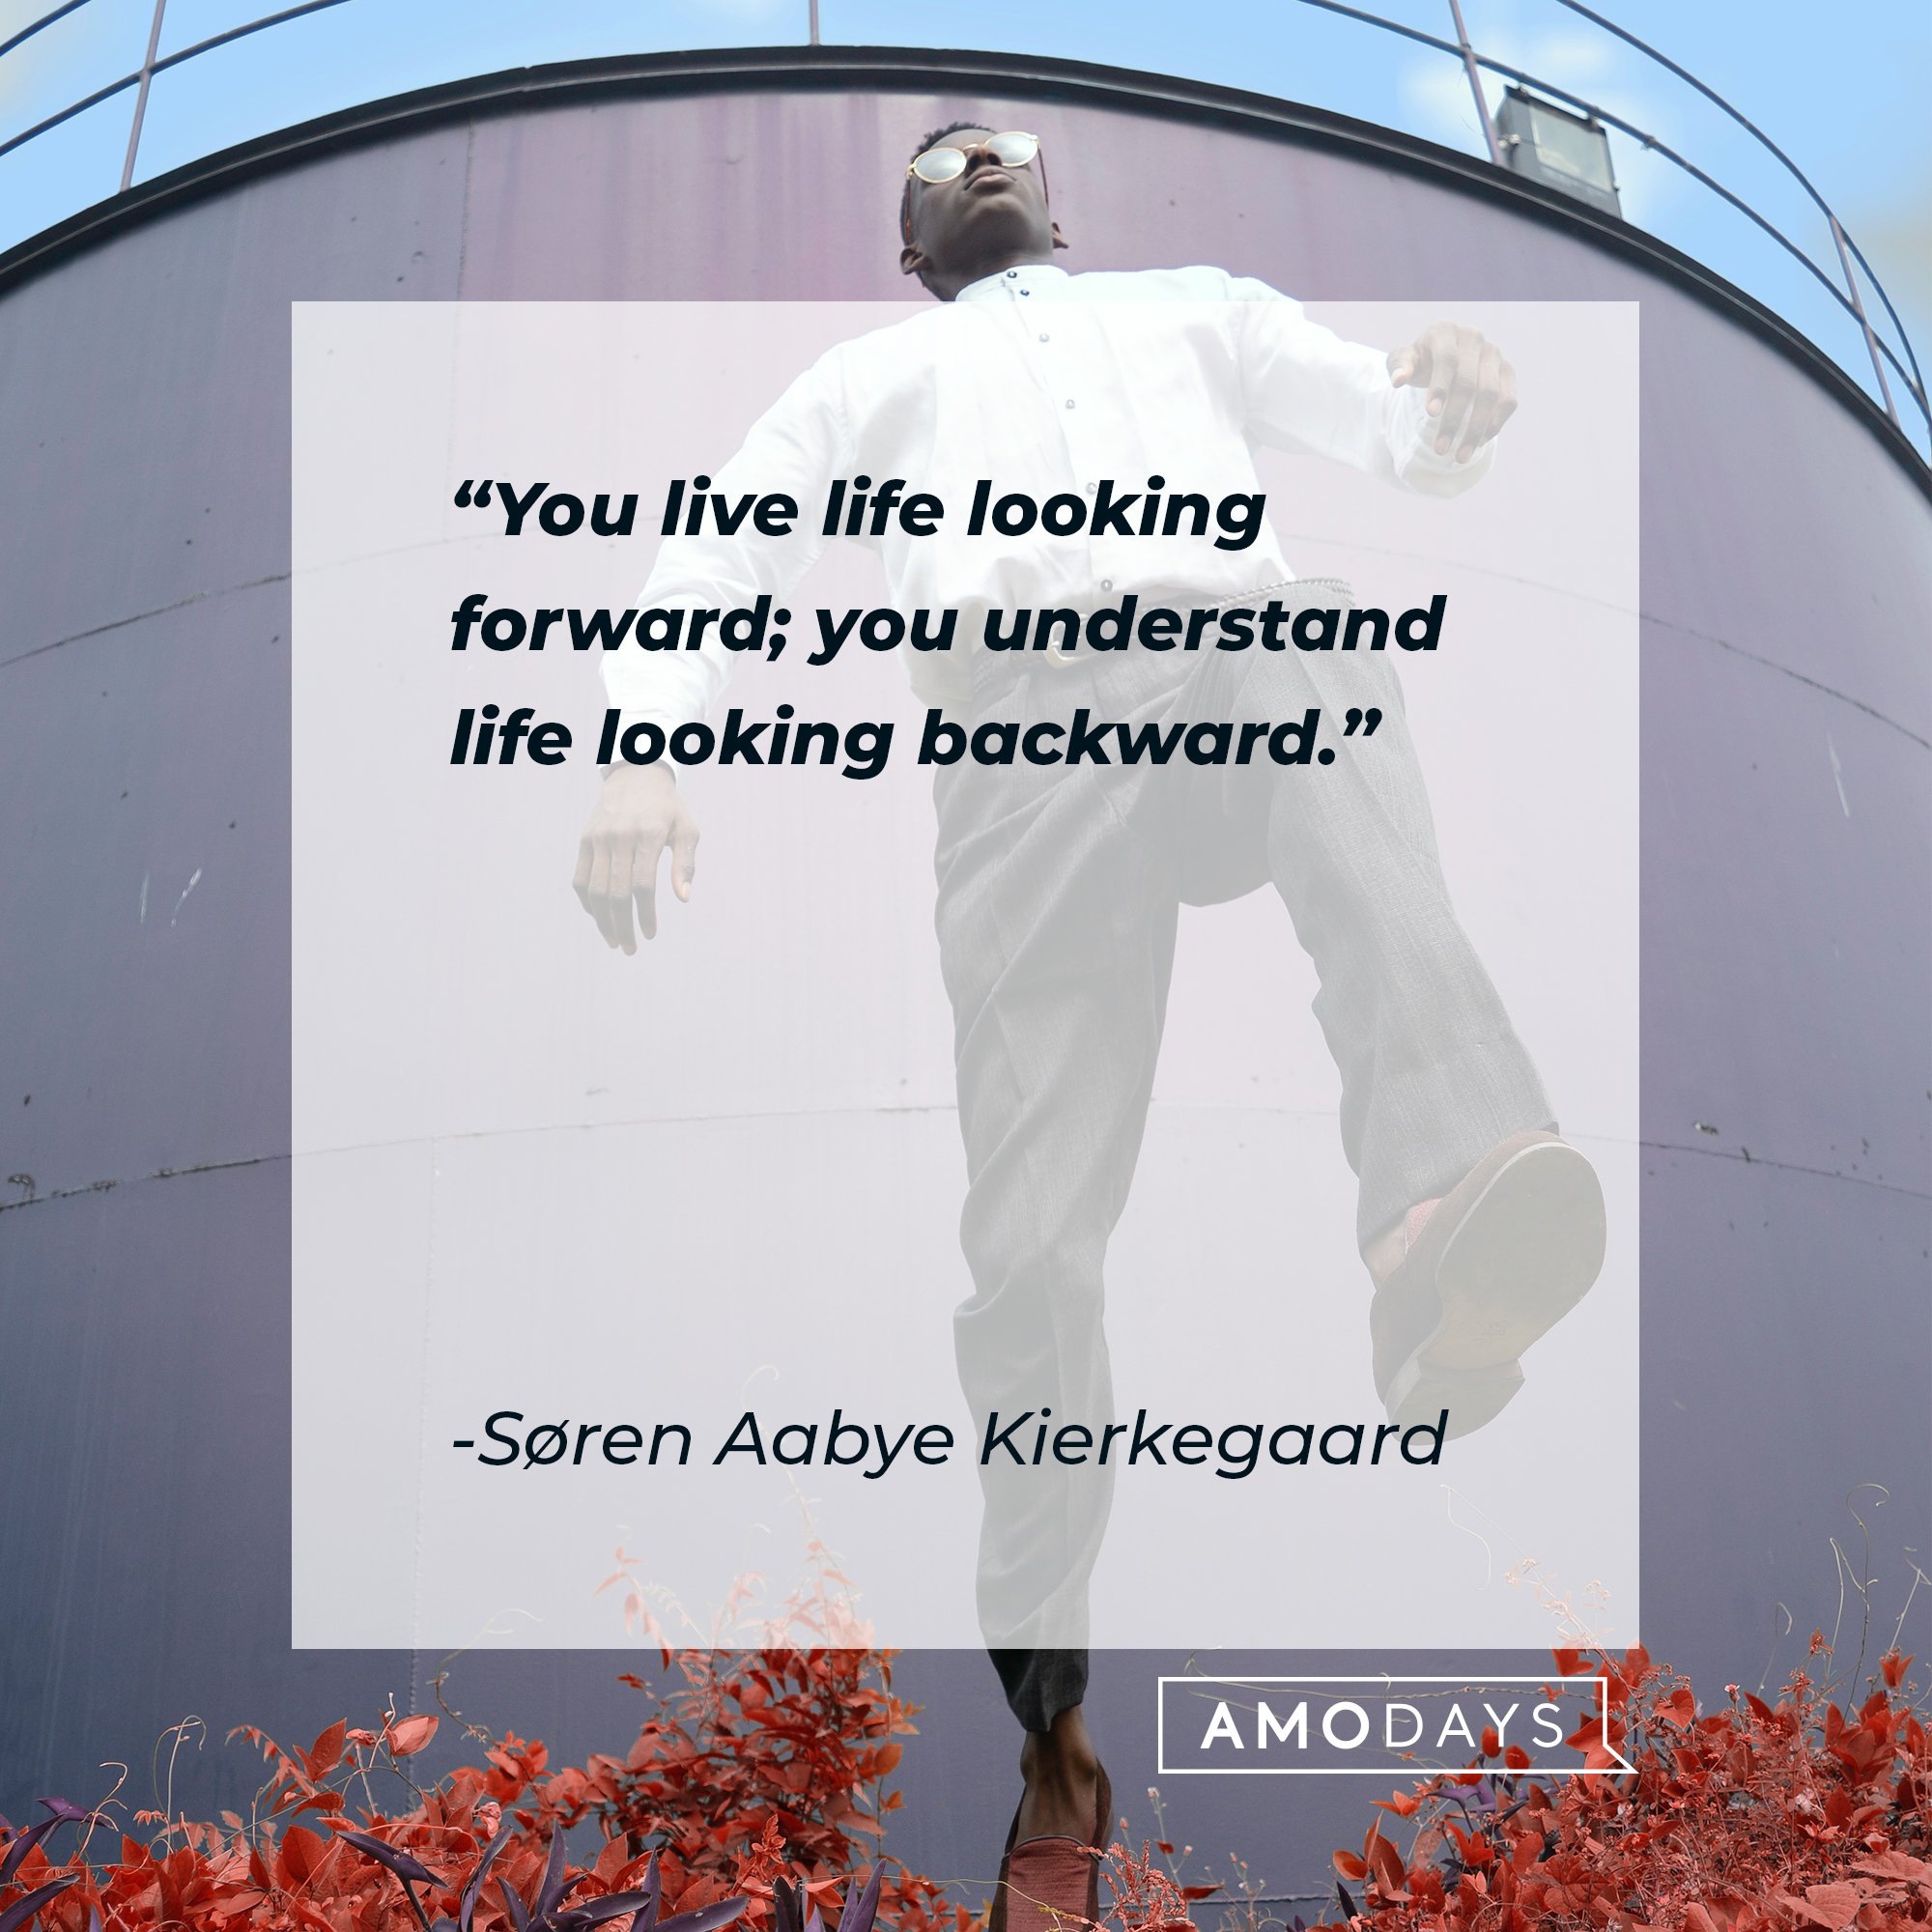 Søren Aabye Kierkegaard’s quote: "You live life looking forward; you understand life looking backward." | Image: AmoDays